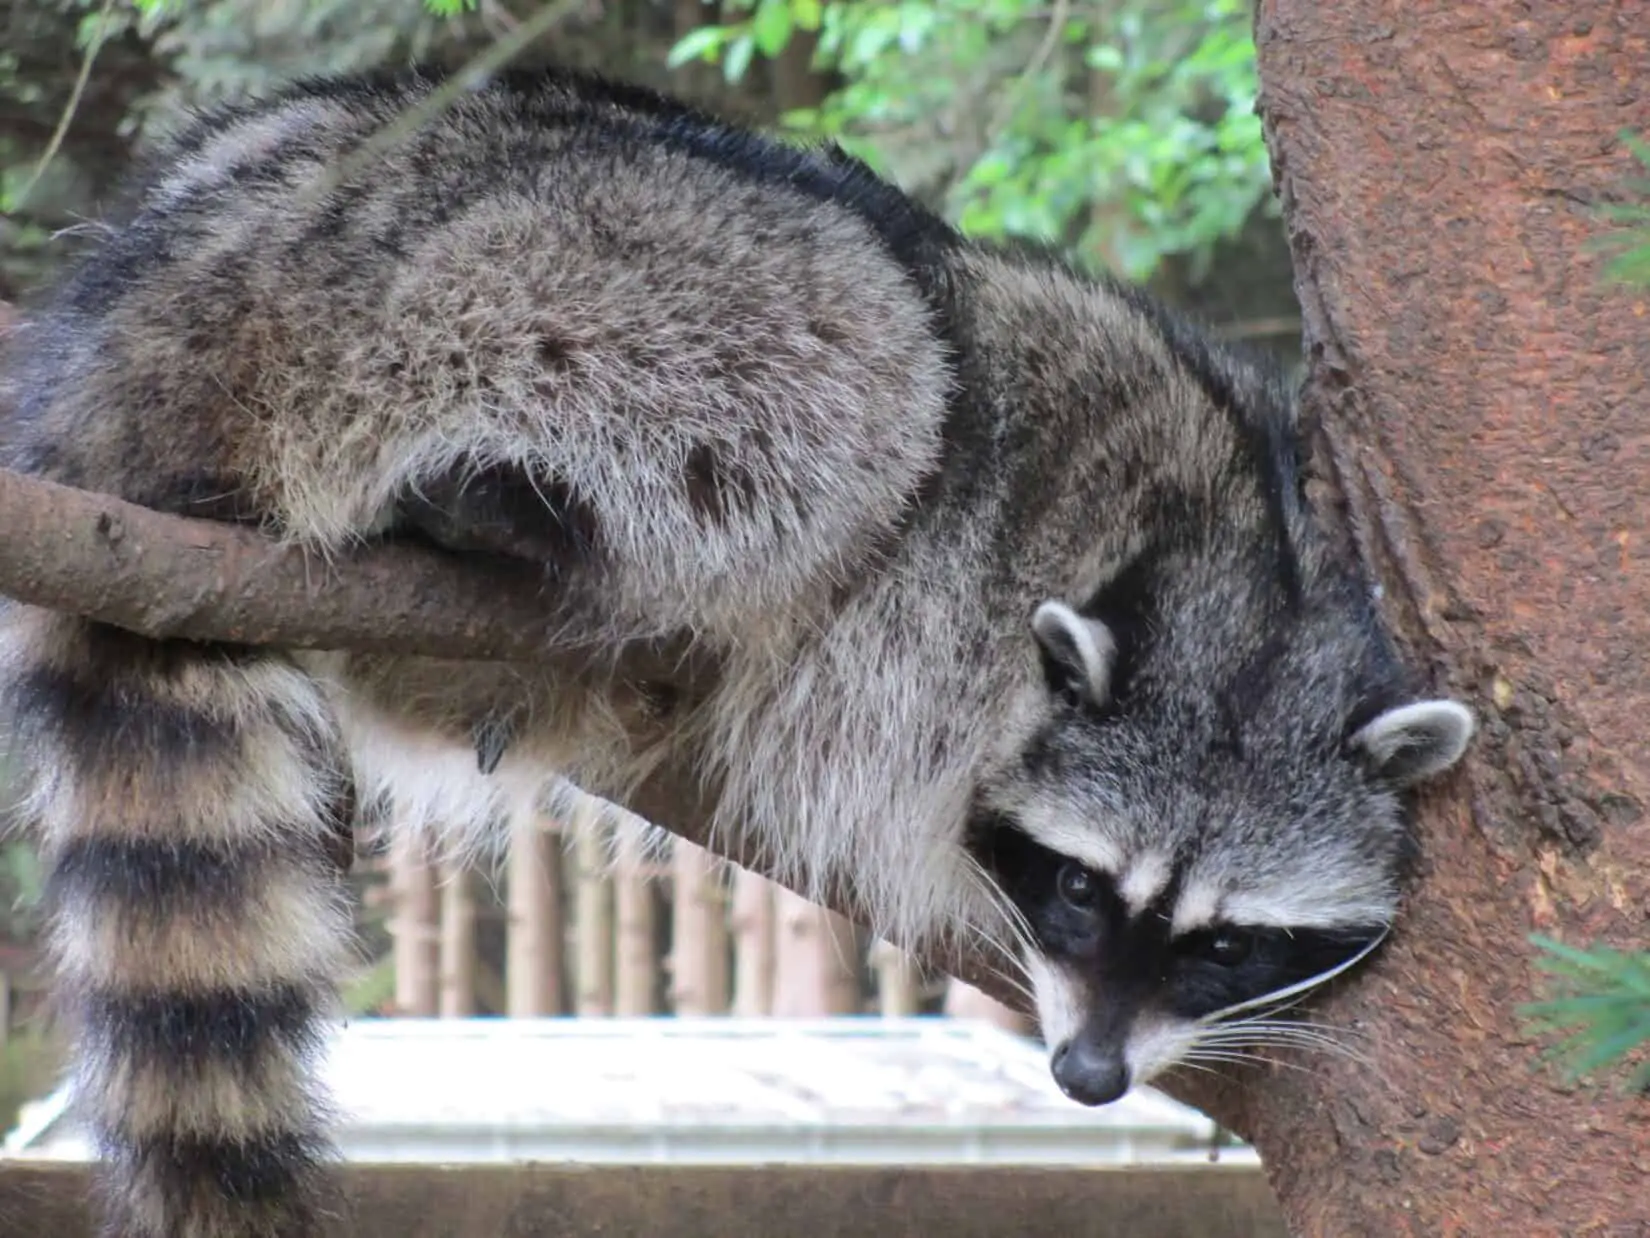 How to Safely Clean a raccoon latrine